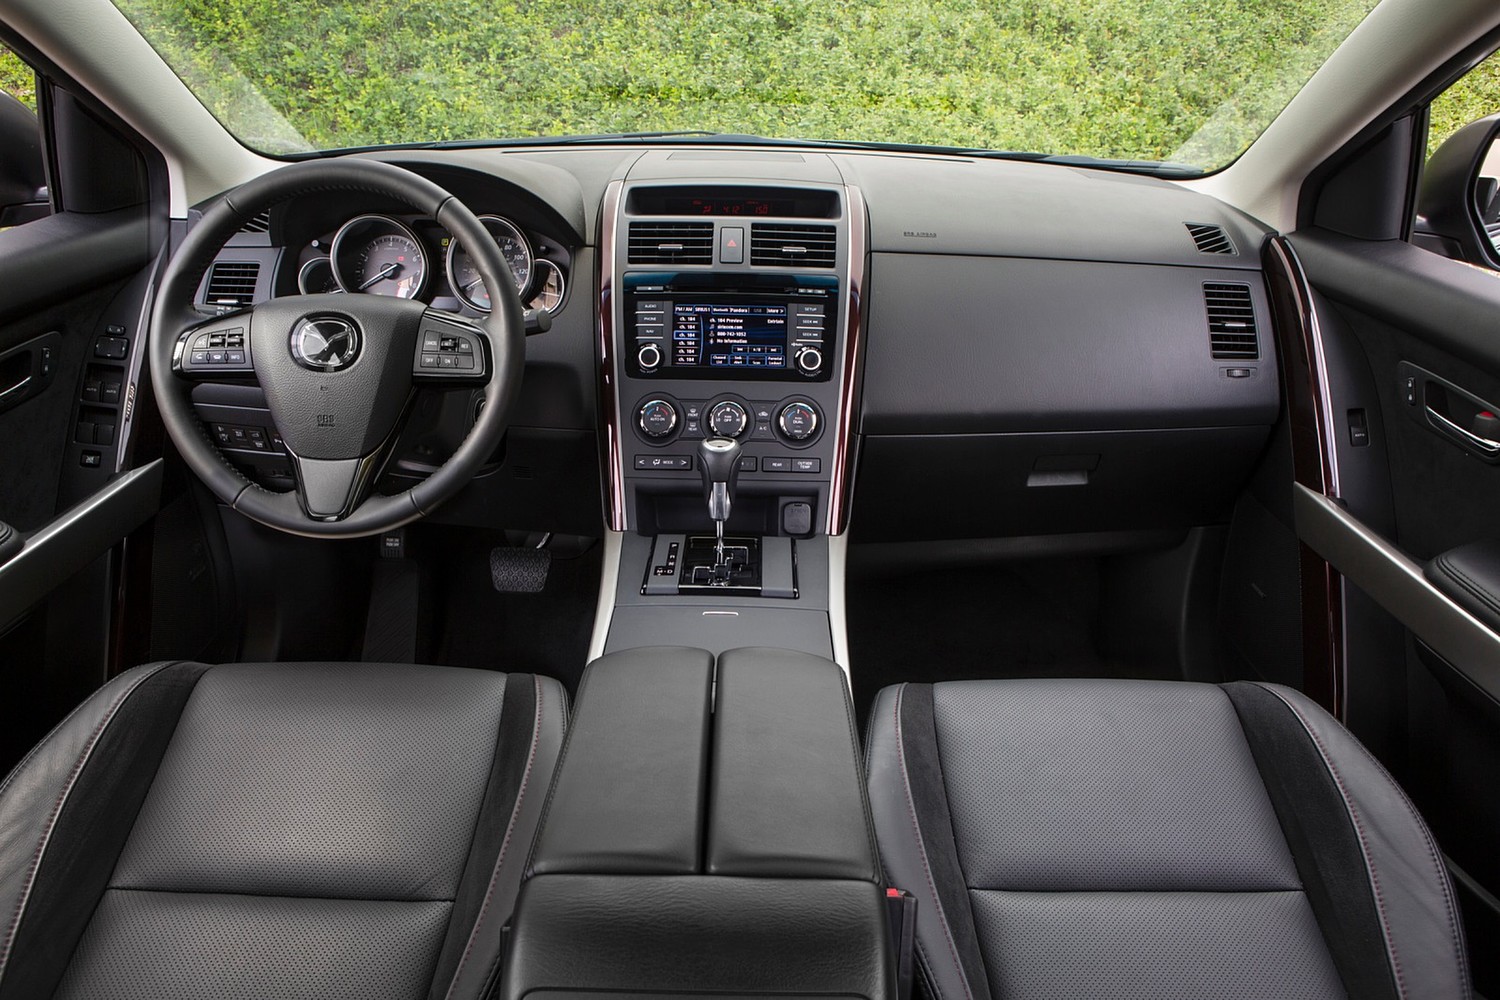 Mazda CX-9 Grand Touring 4dr SUV Dashboard (2013 model year shown)